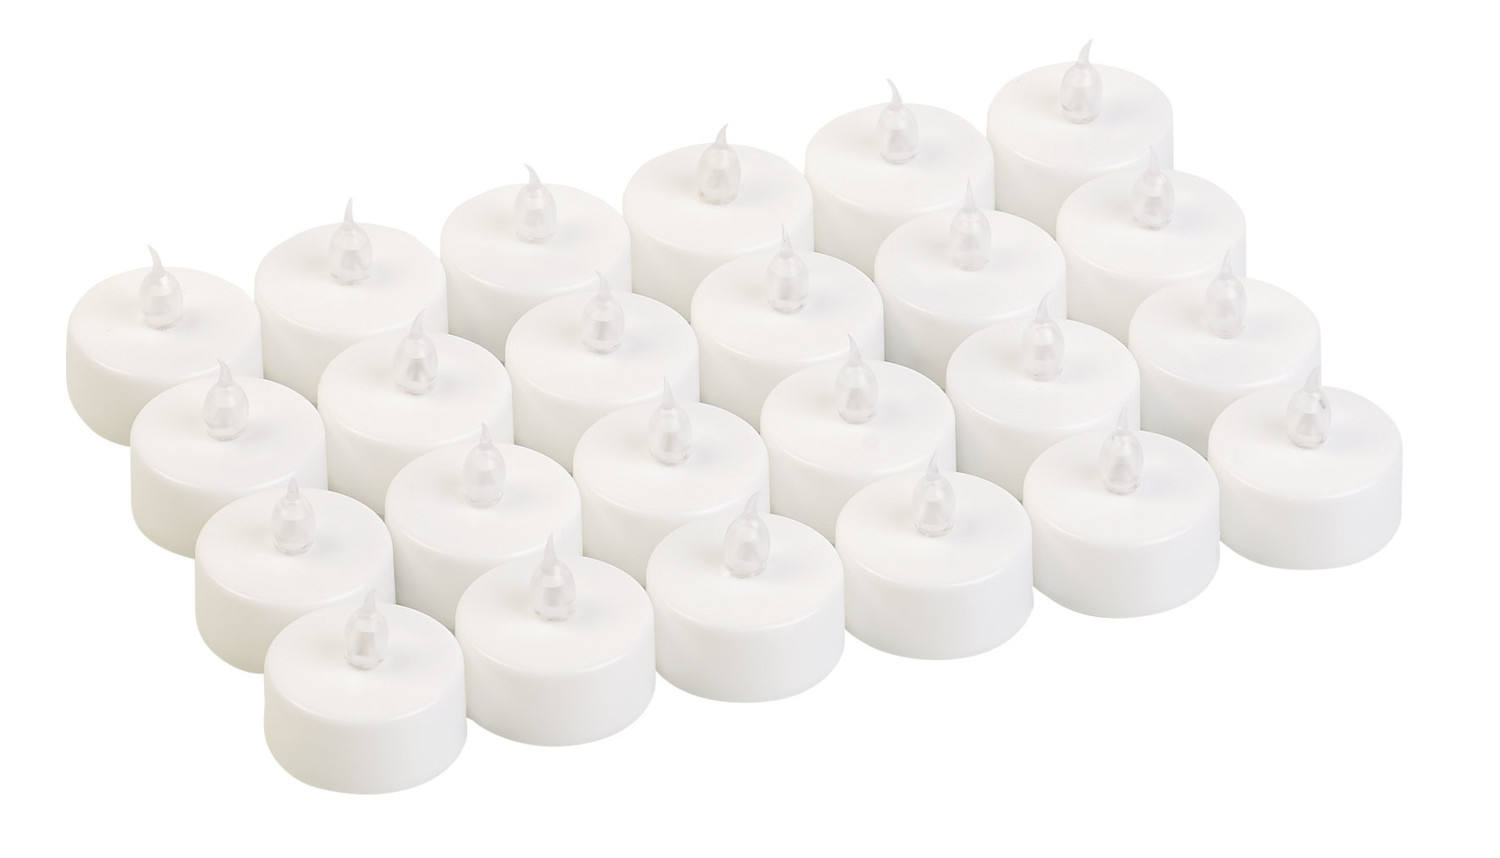 Bougies chauffe-plat sans flamme à piles, avec piles CR2032, bougies  chauffe-plat LED sans flamme, bougies vacillantes avec effet vacillant,  blanc